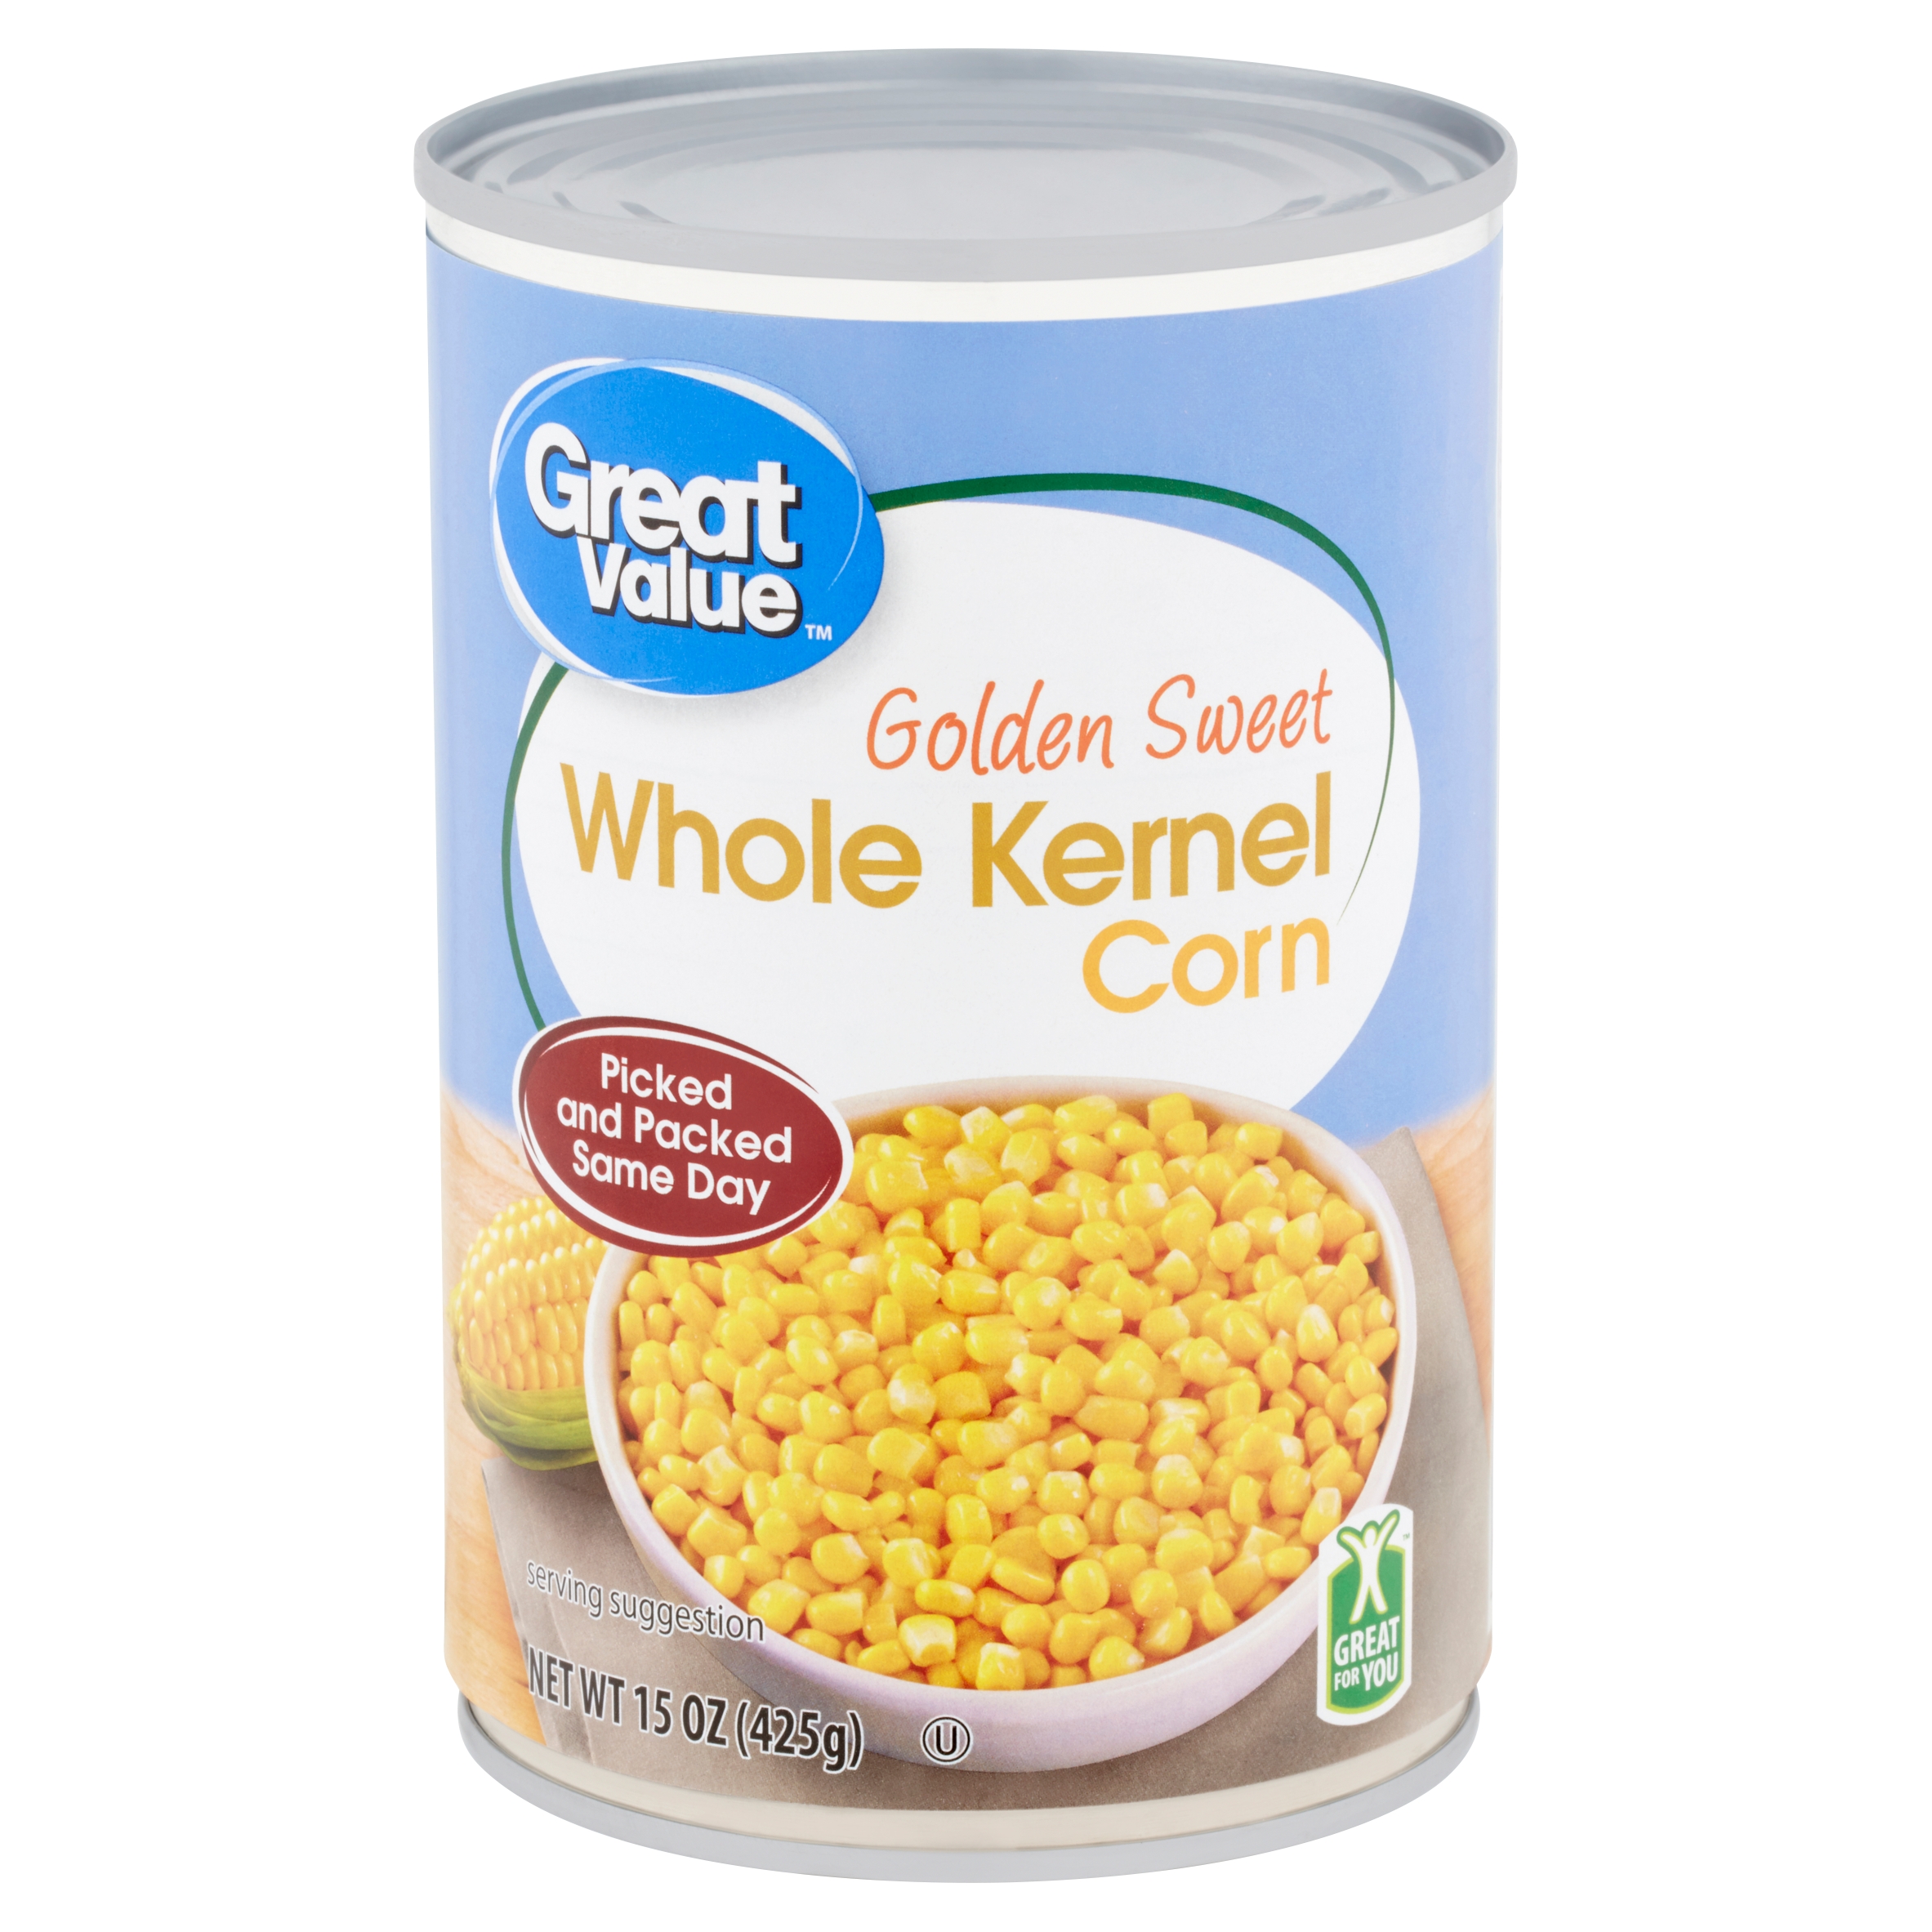 Great Value Golden Sweet Whole Kernel Corn, 15 Oz Image